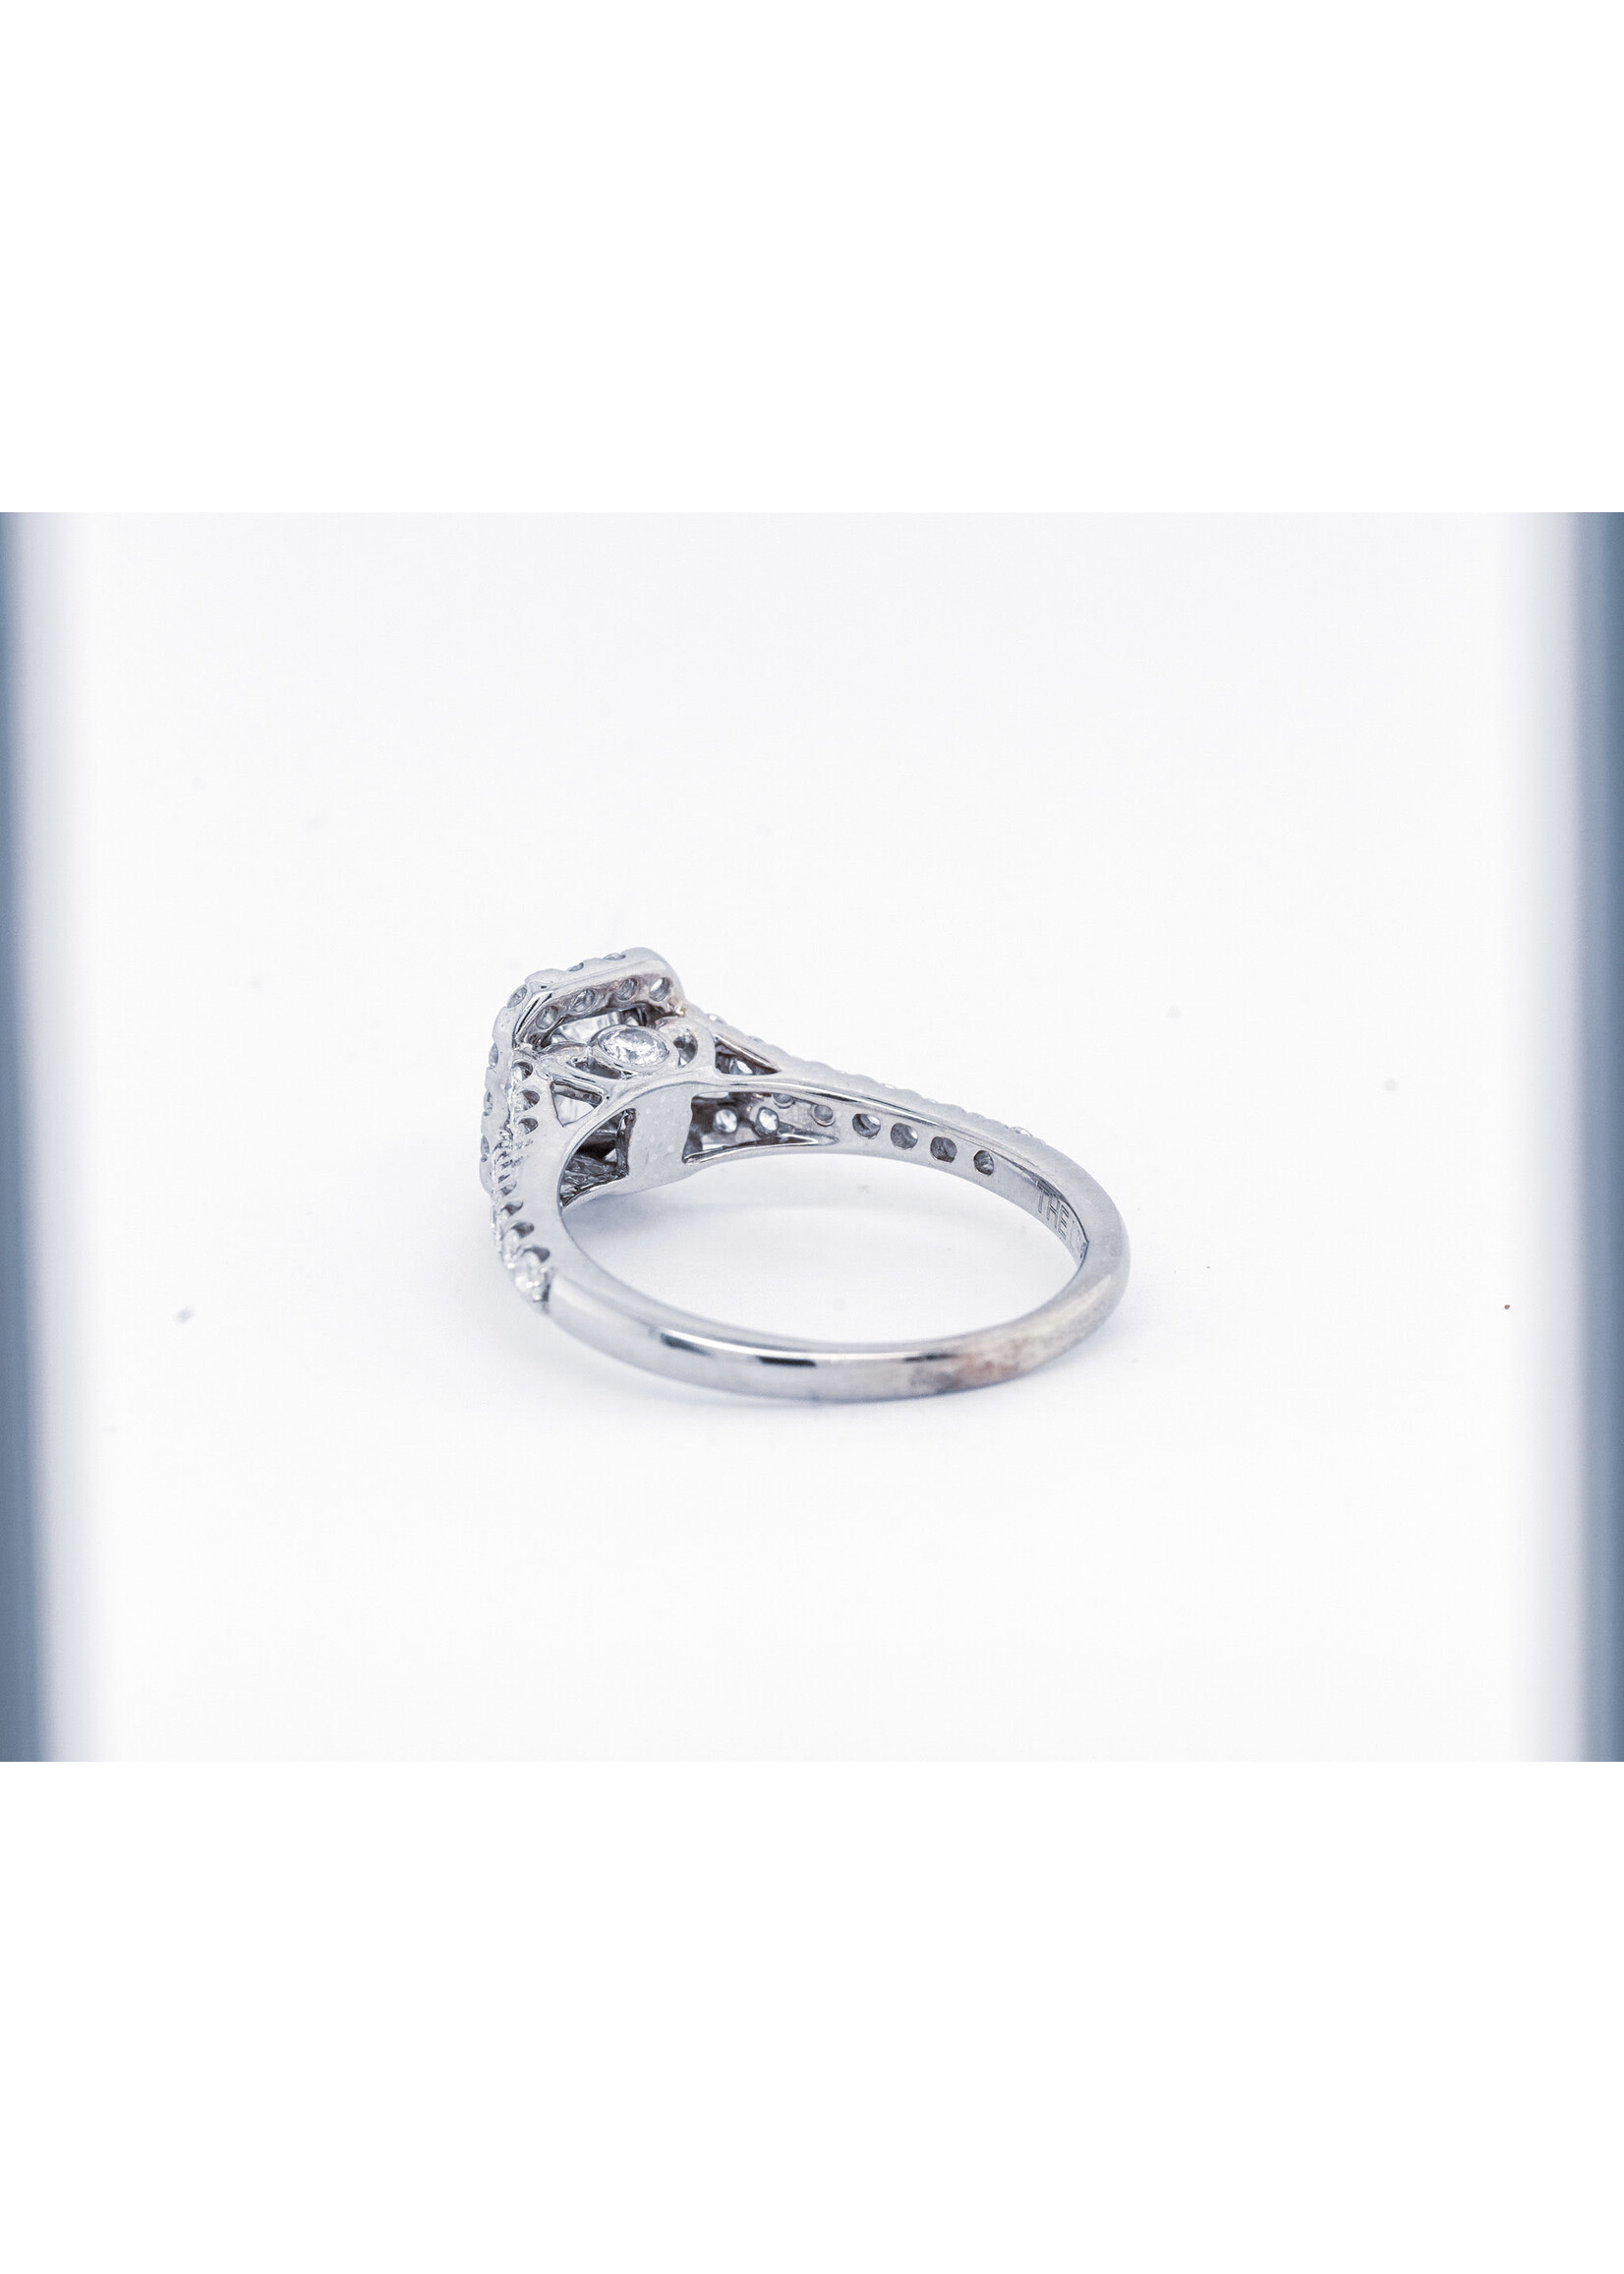 14KW 4.07g 1.25ctw (.47ctr) F/VS2 Emerald Cut Leo Diamond Halo Engagement Ring (6.75)